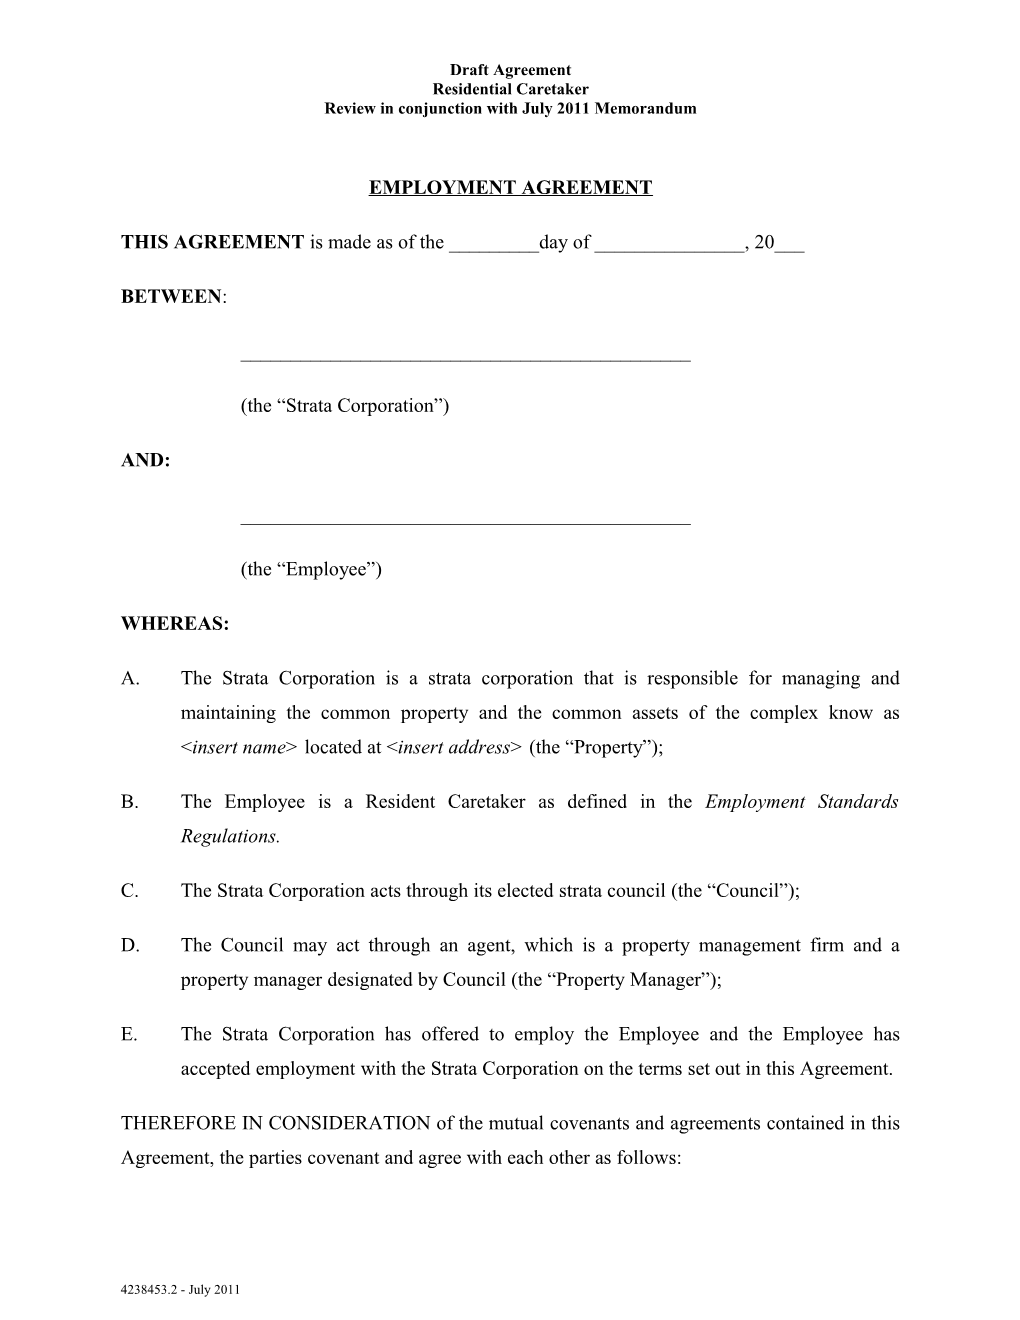 Employment Agreement s2